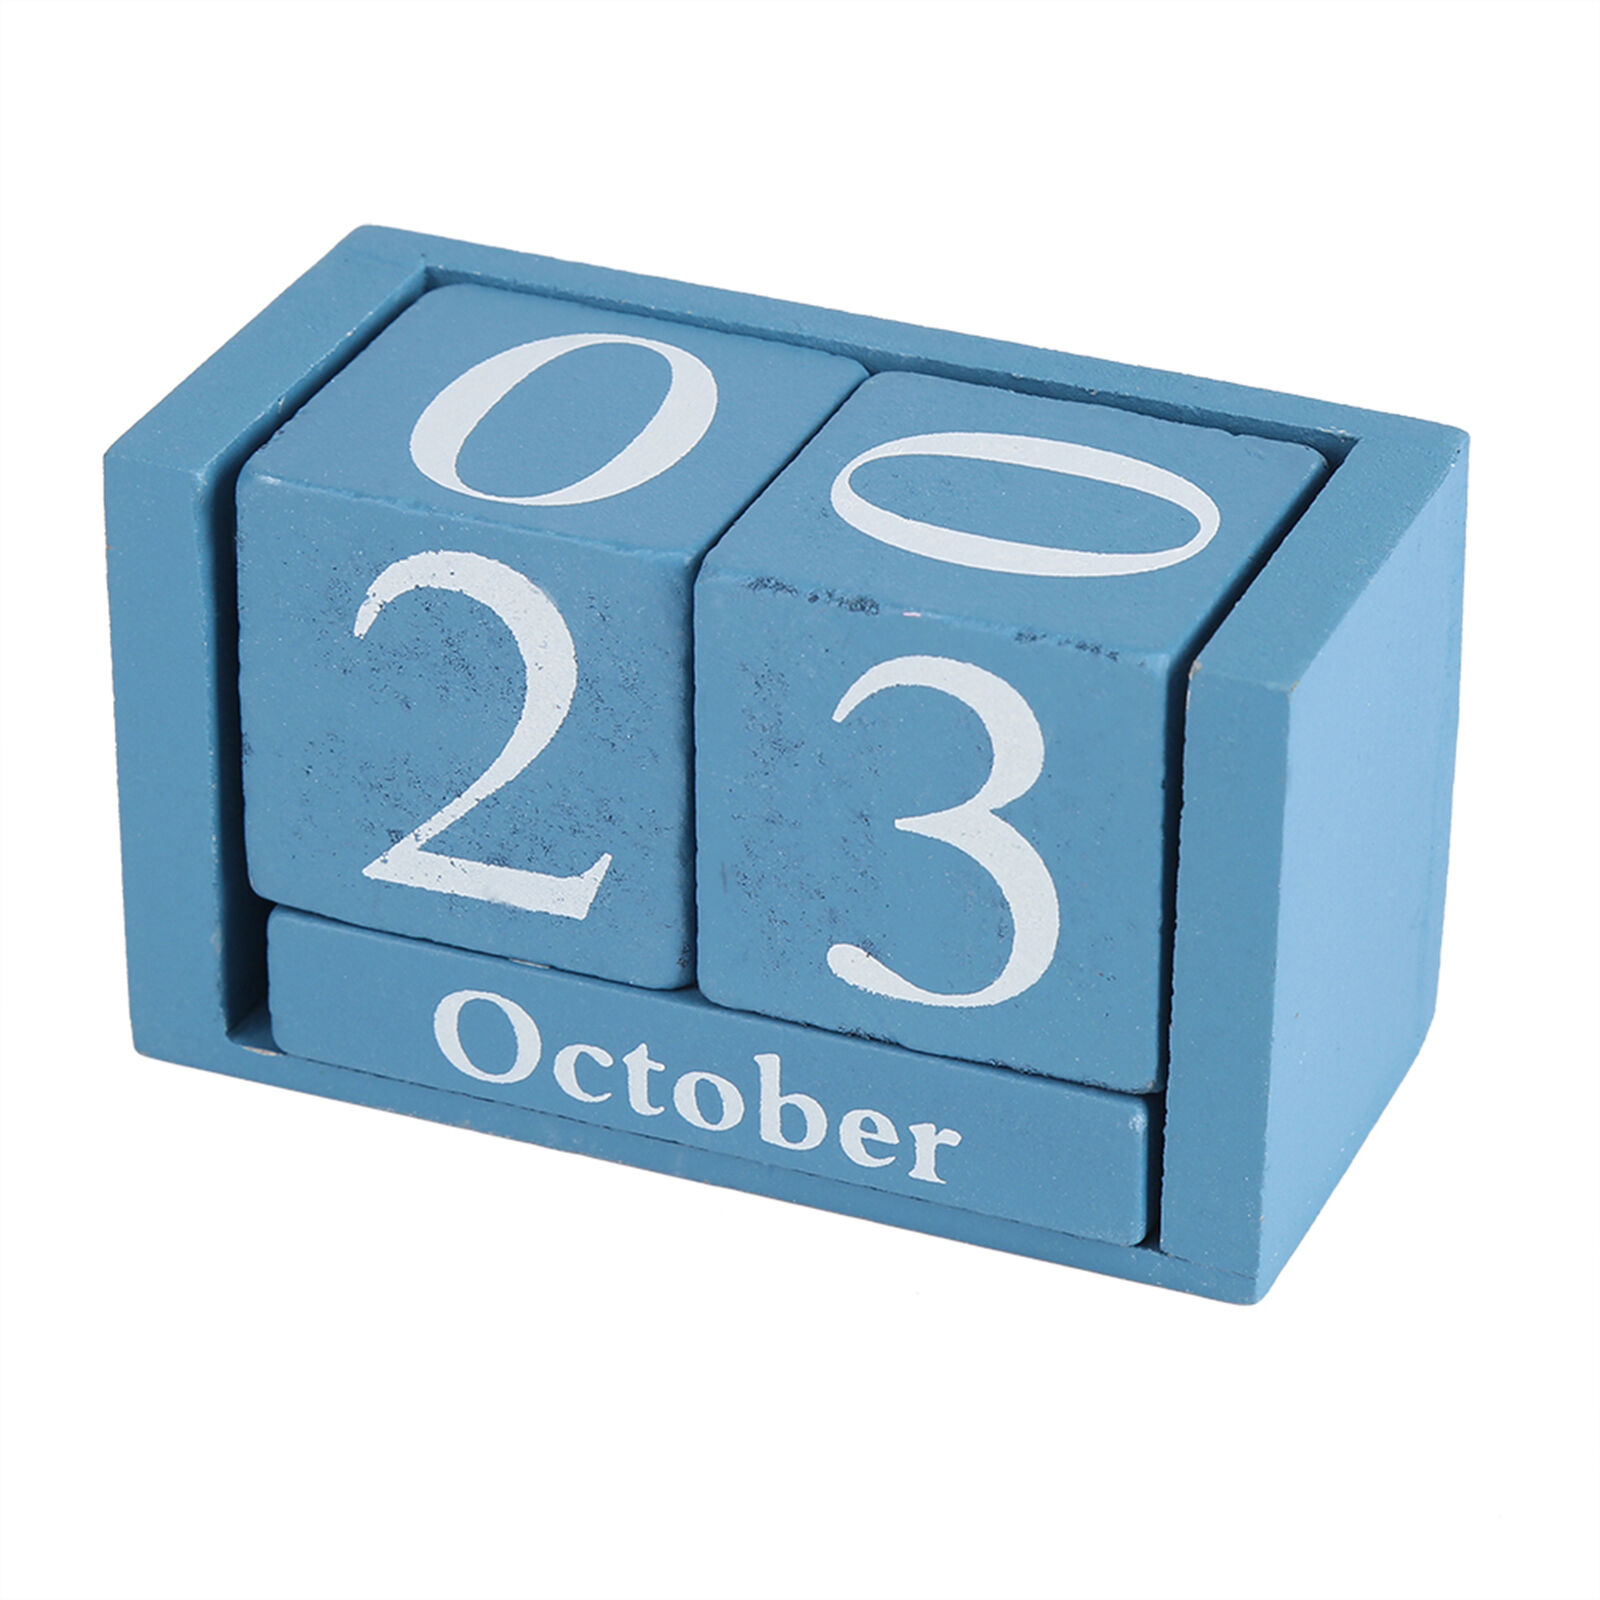 Wood Block Calendar Desk Decoration Blue